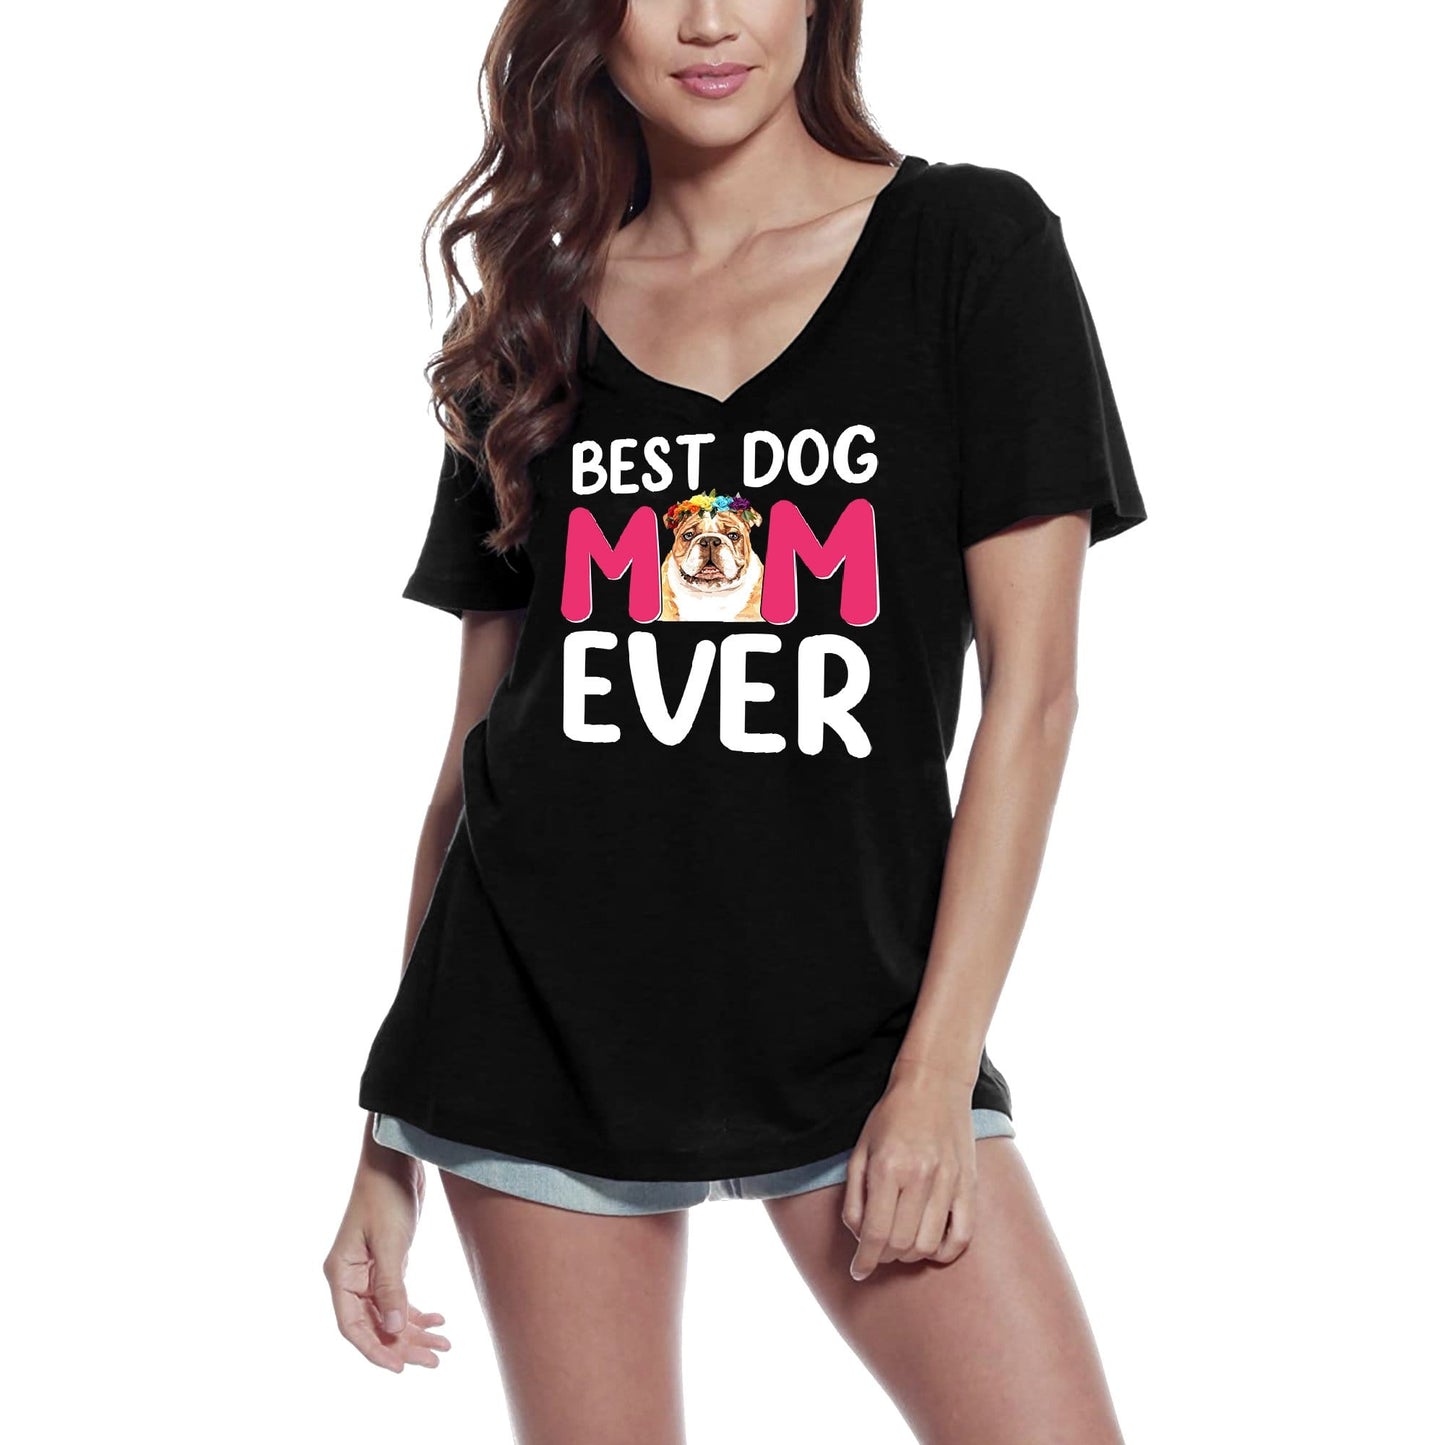 ULTRABASIC Women's T-Shirt Best Dog Mom Ever - Funny Dog Tee Shirt